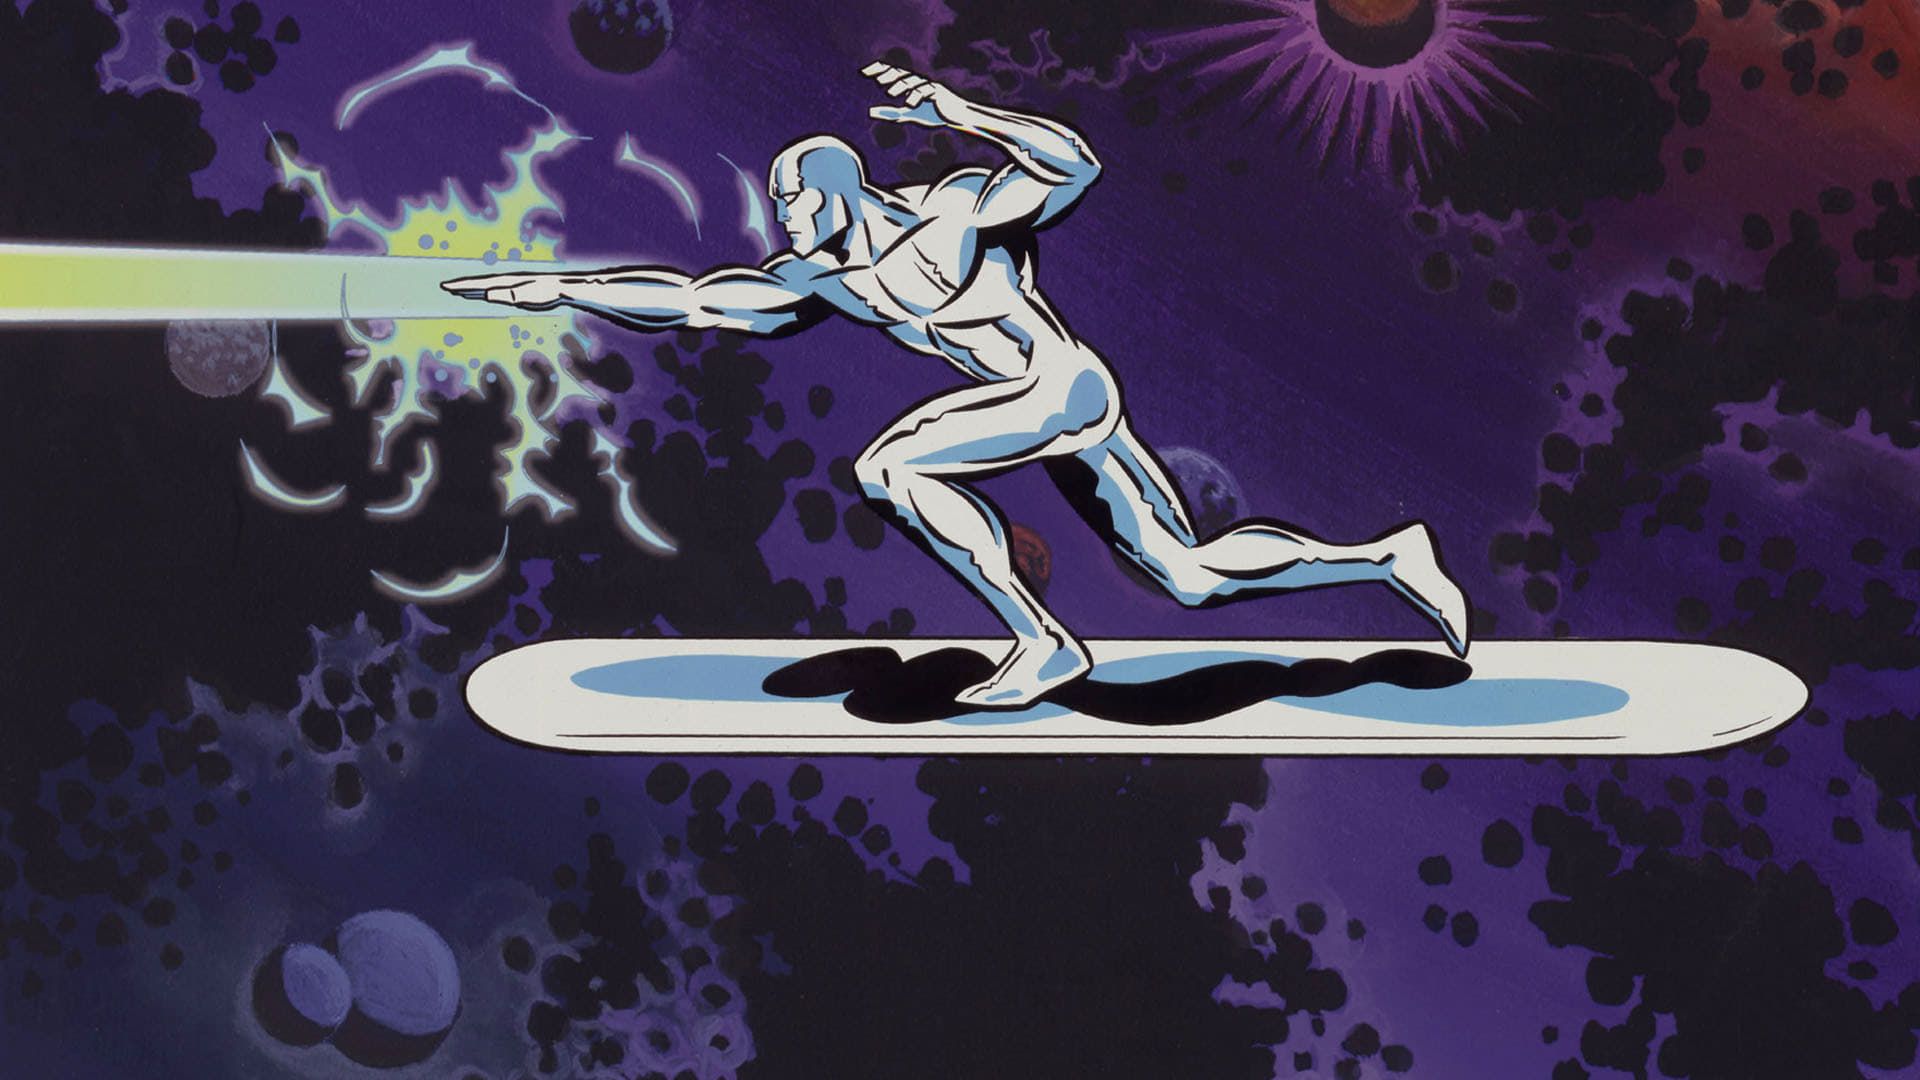 Silver Surfer background